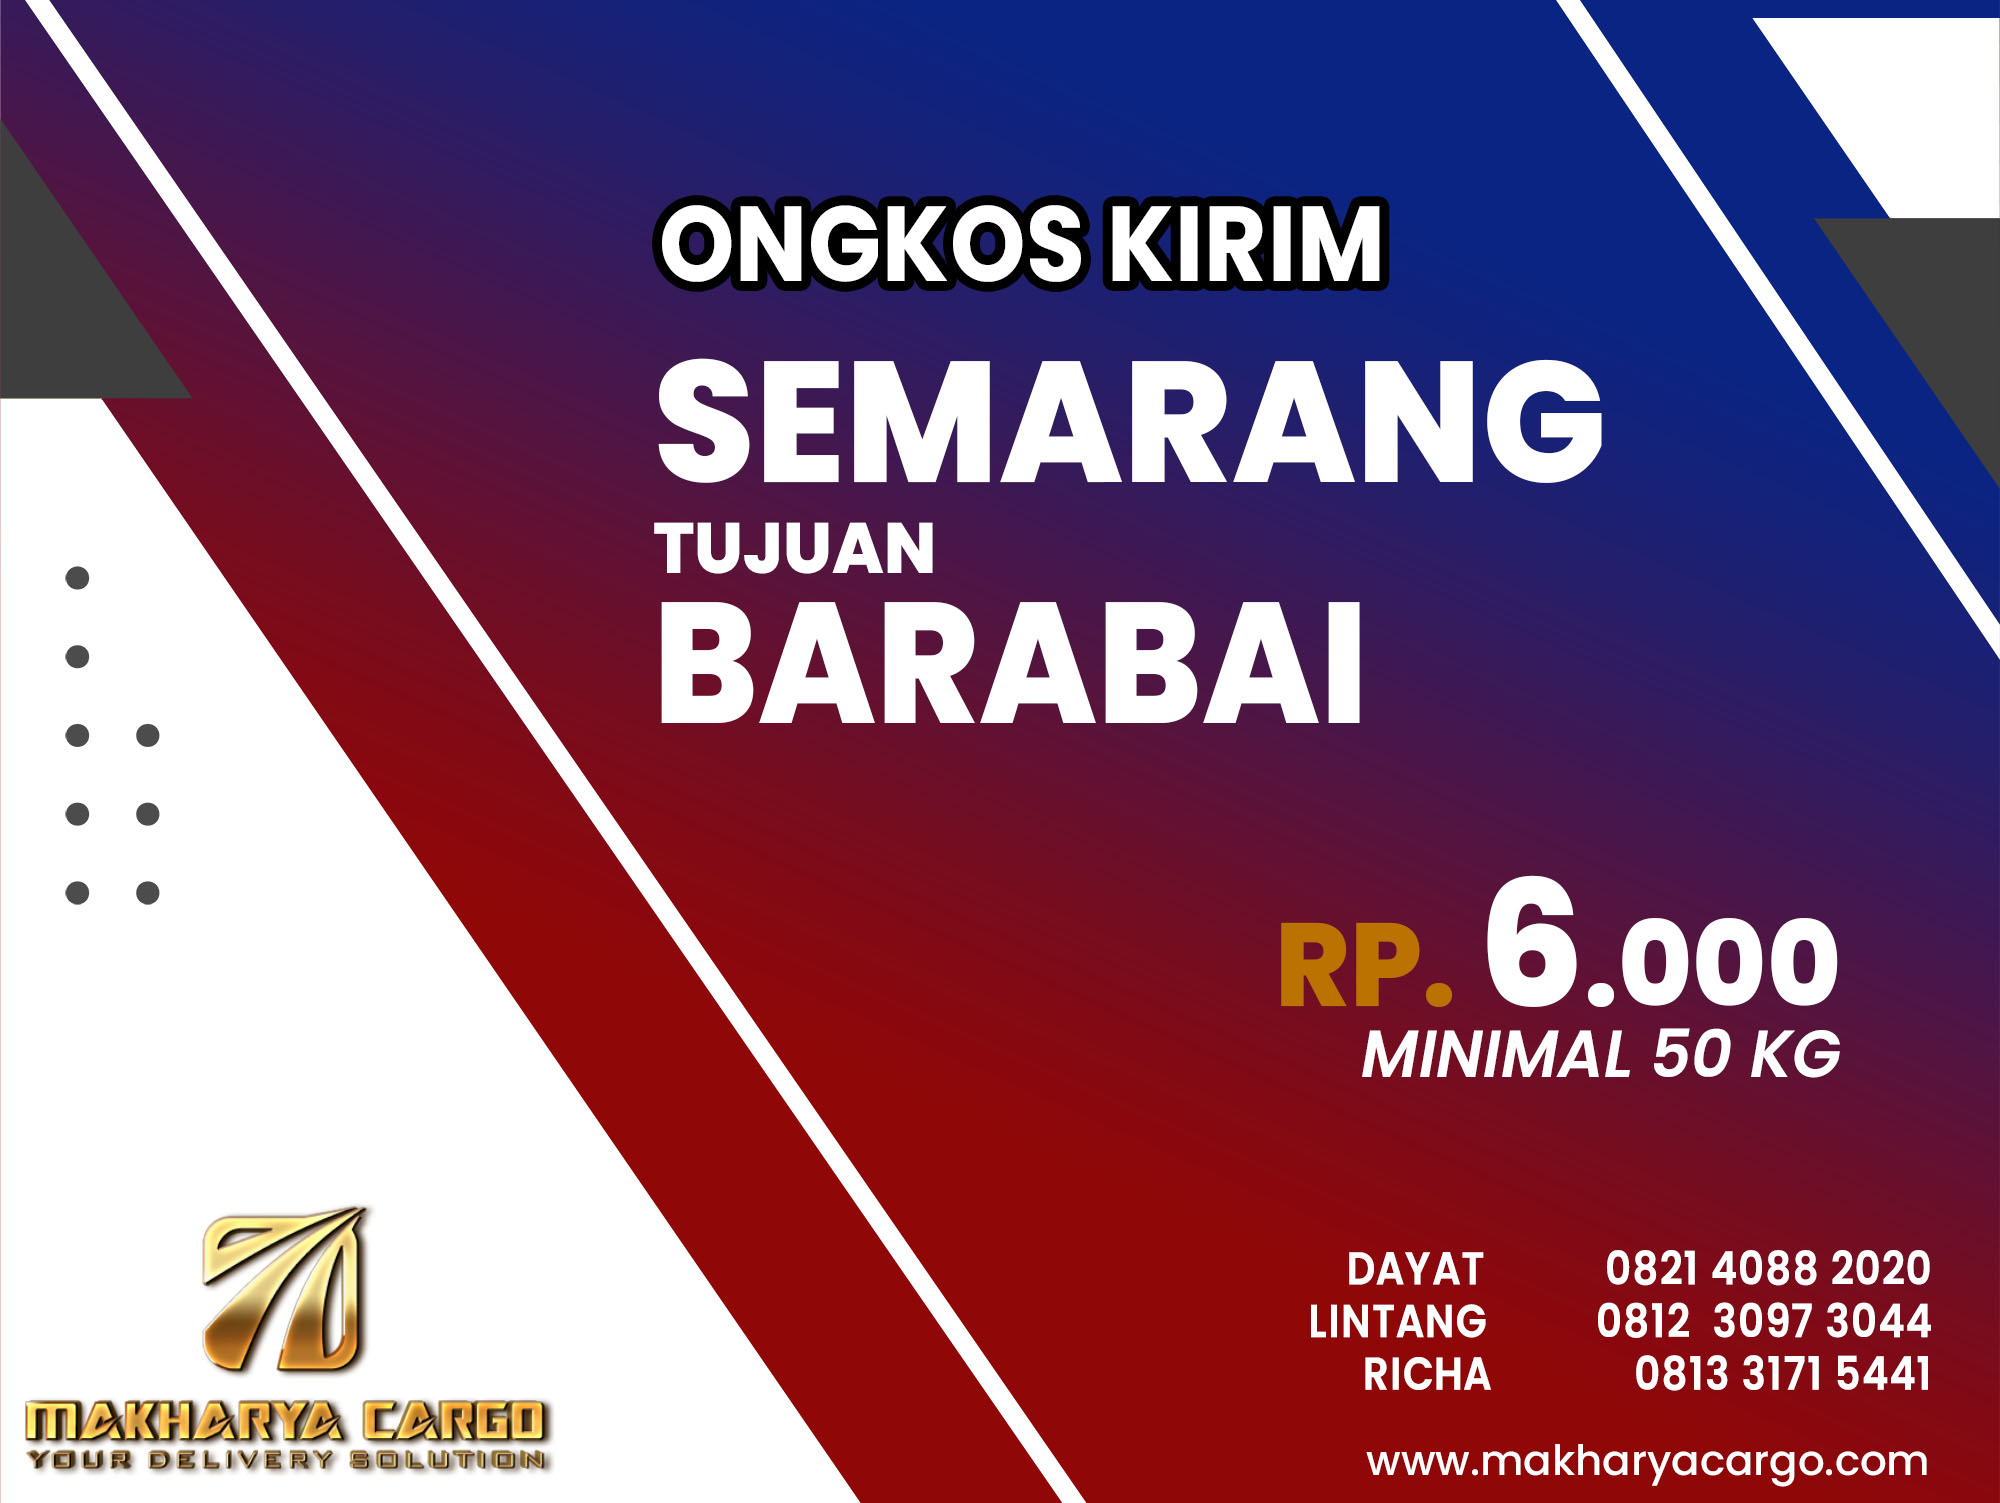 Ongkos Kirim Semarang Barabai